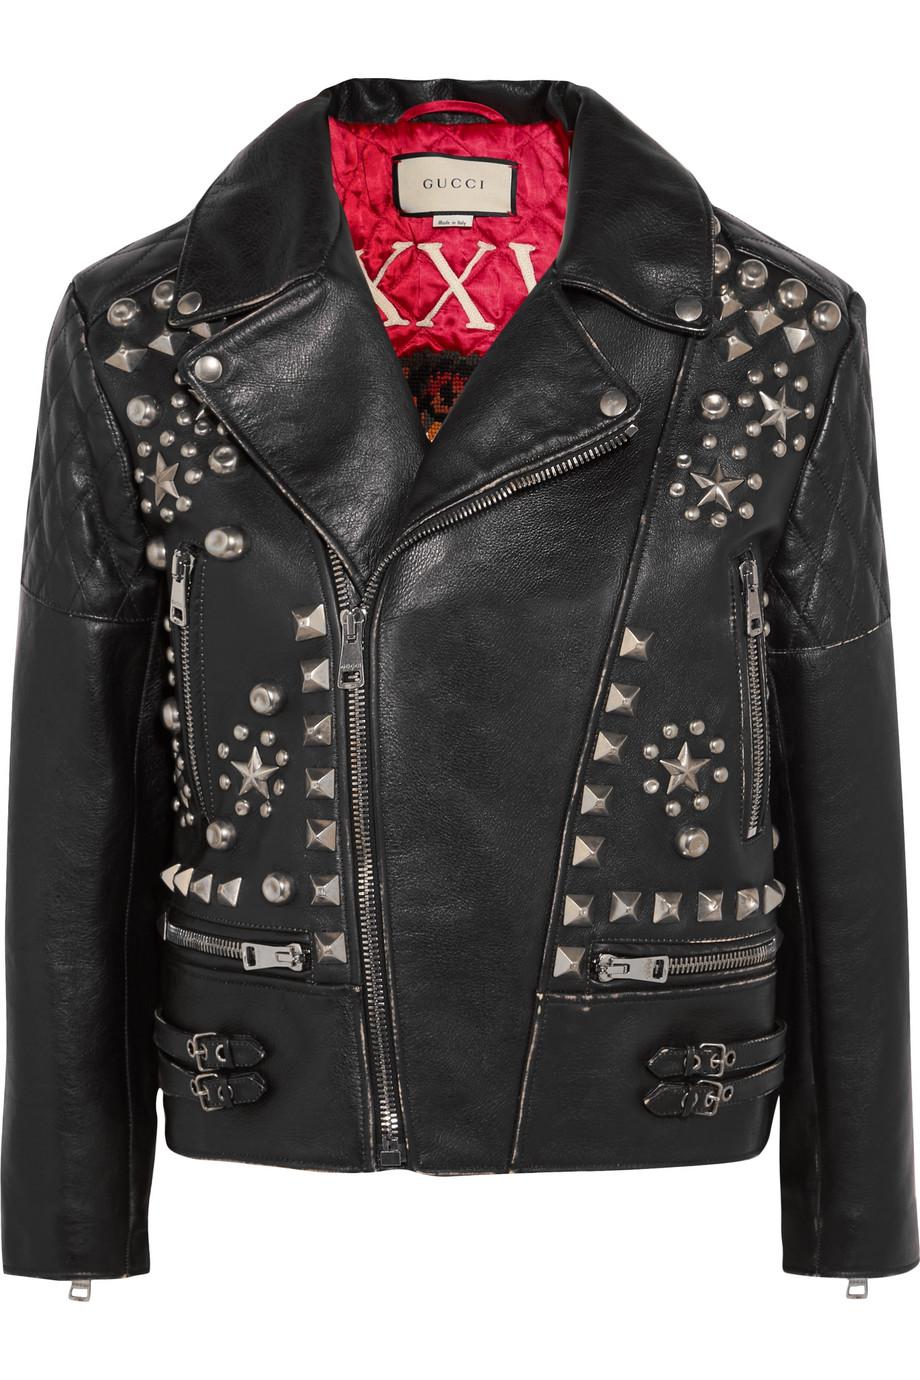 Gucci Studded Leather Biker Jacket in Black | Lyst